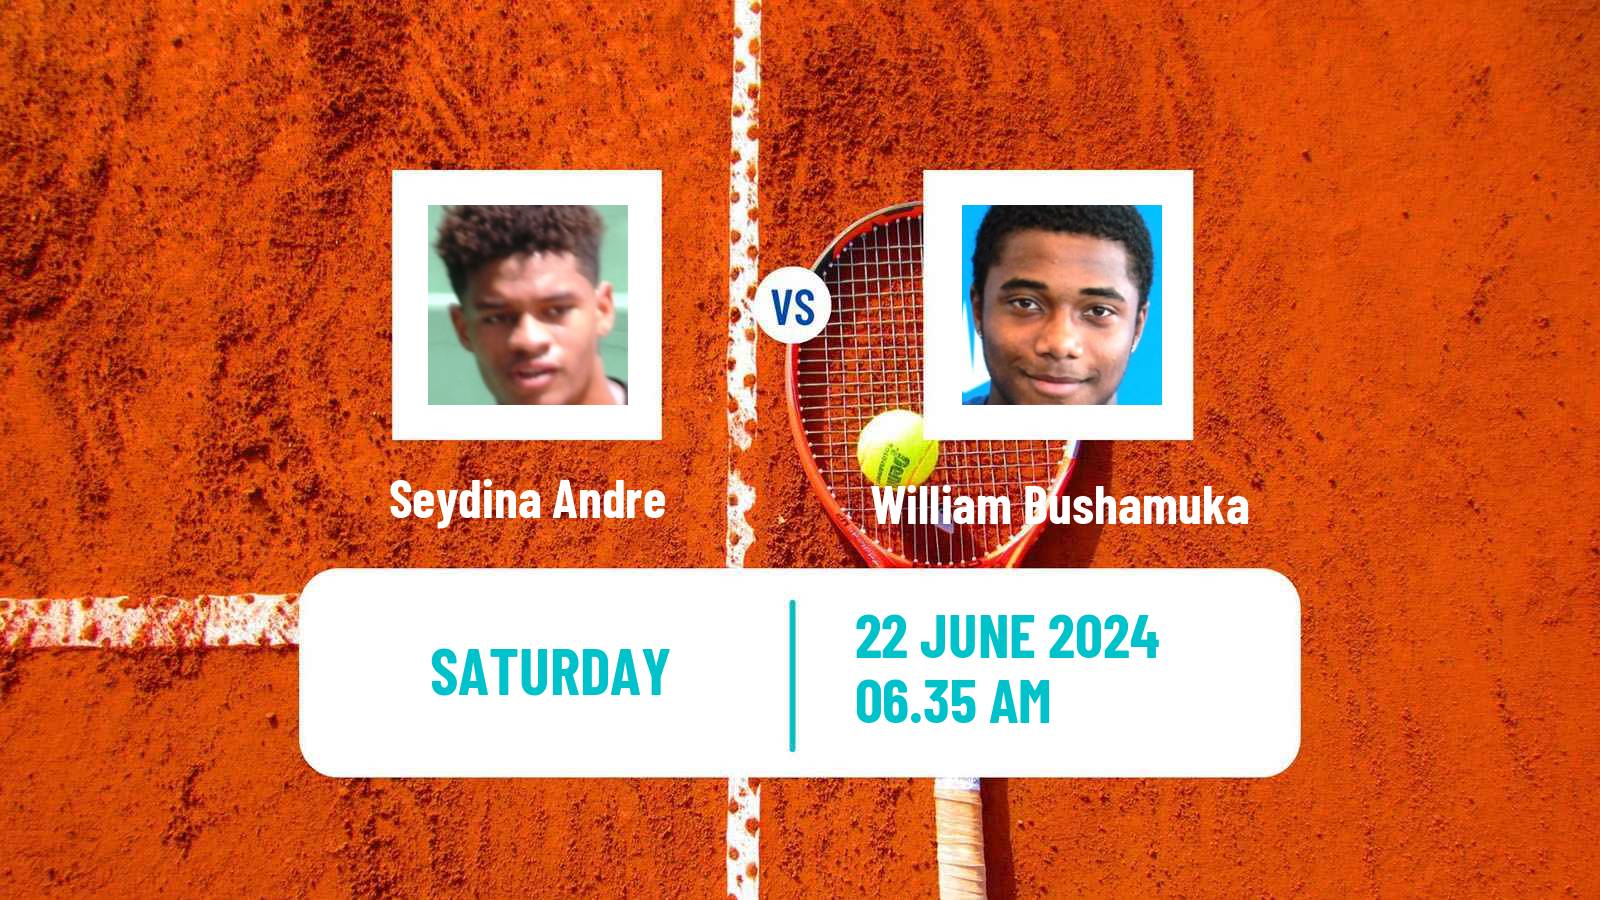 Tennis Davis Cup Group IV Seydina Andre - William Bushamuka